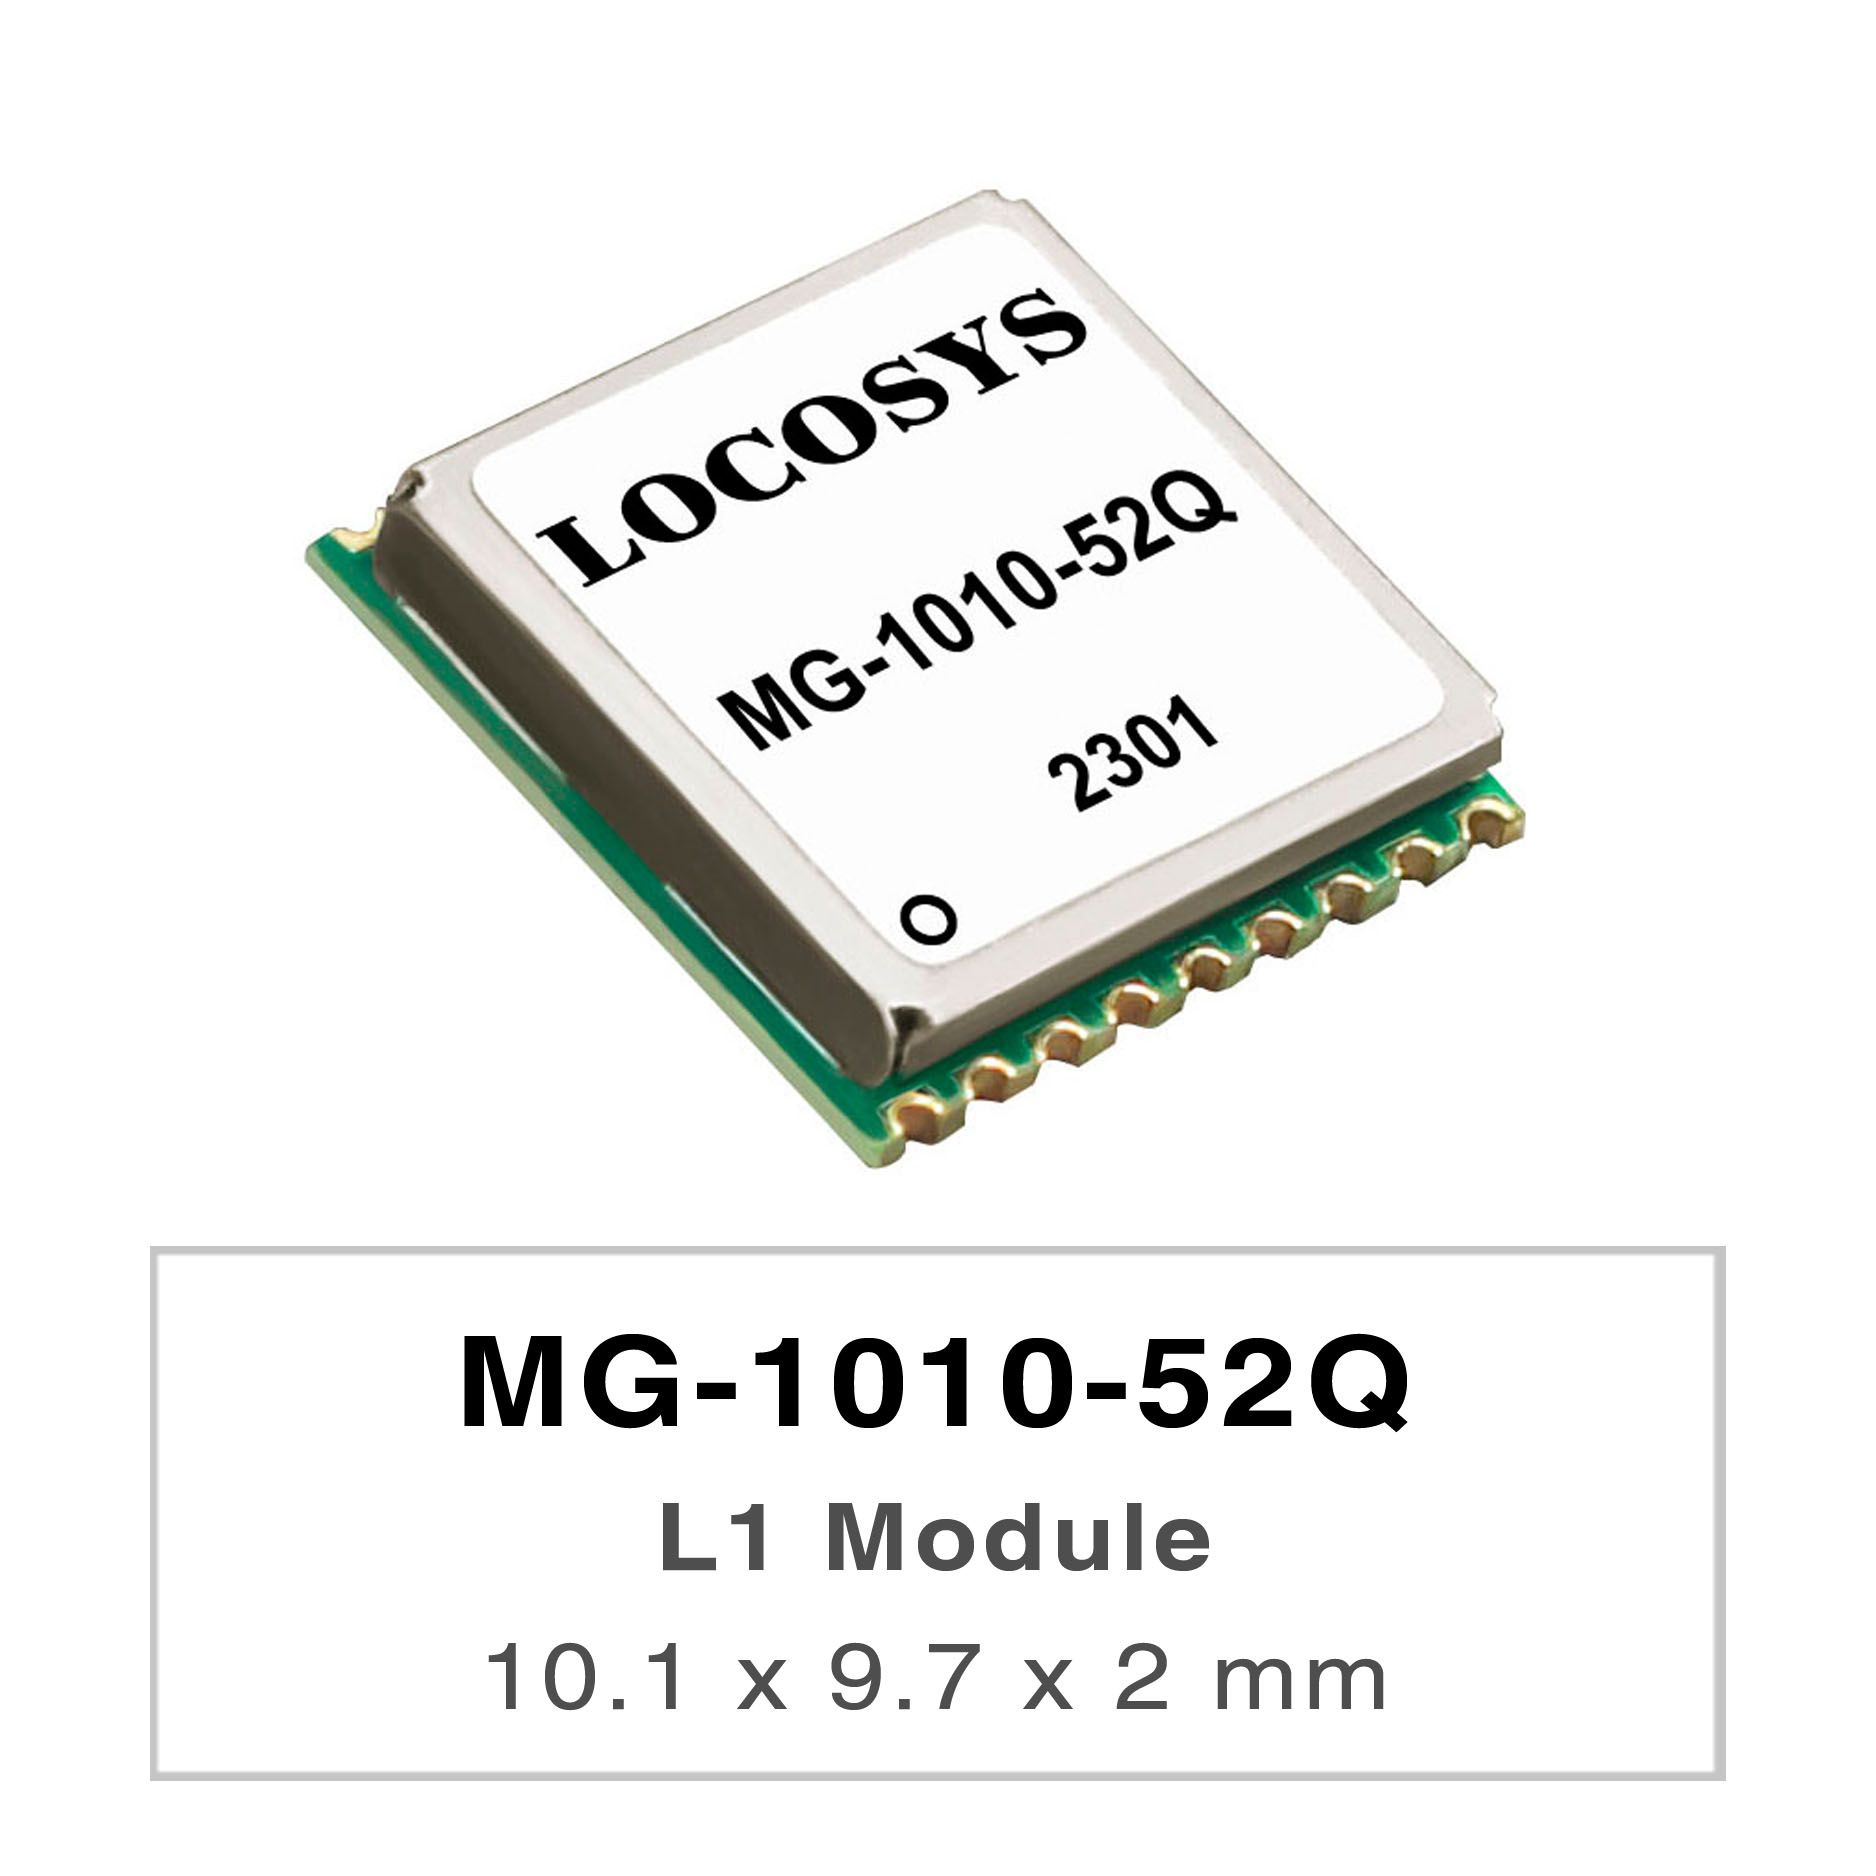 LOCOSYS MG-1010-52Q es un módulo GNSS completo e independiente.